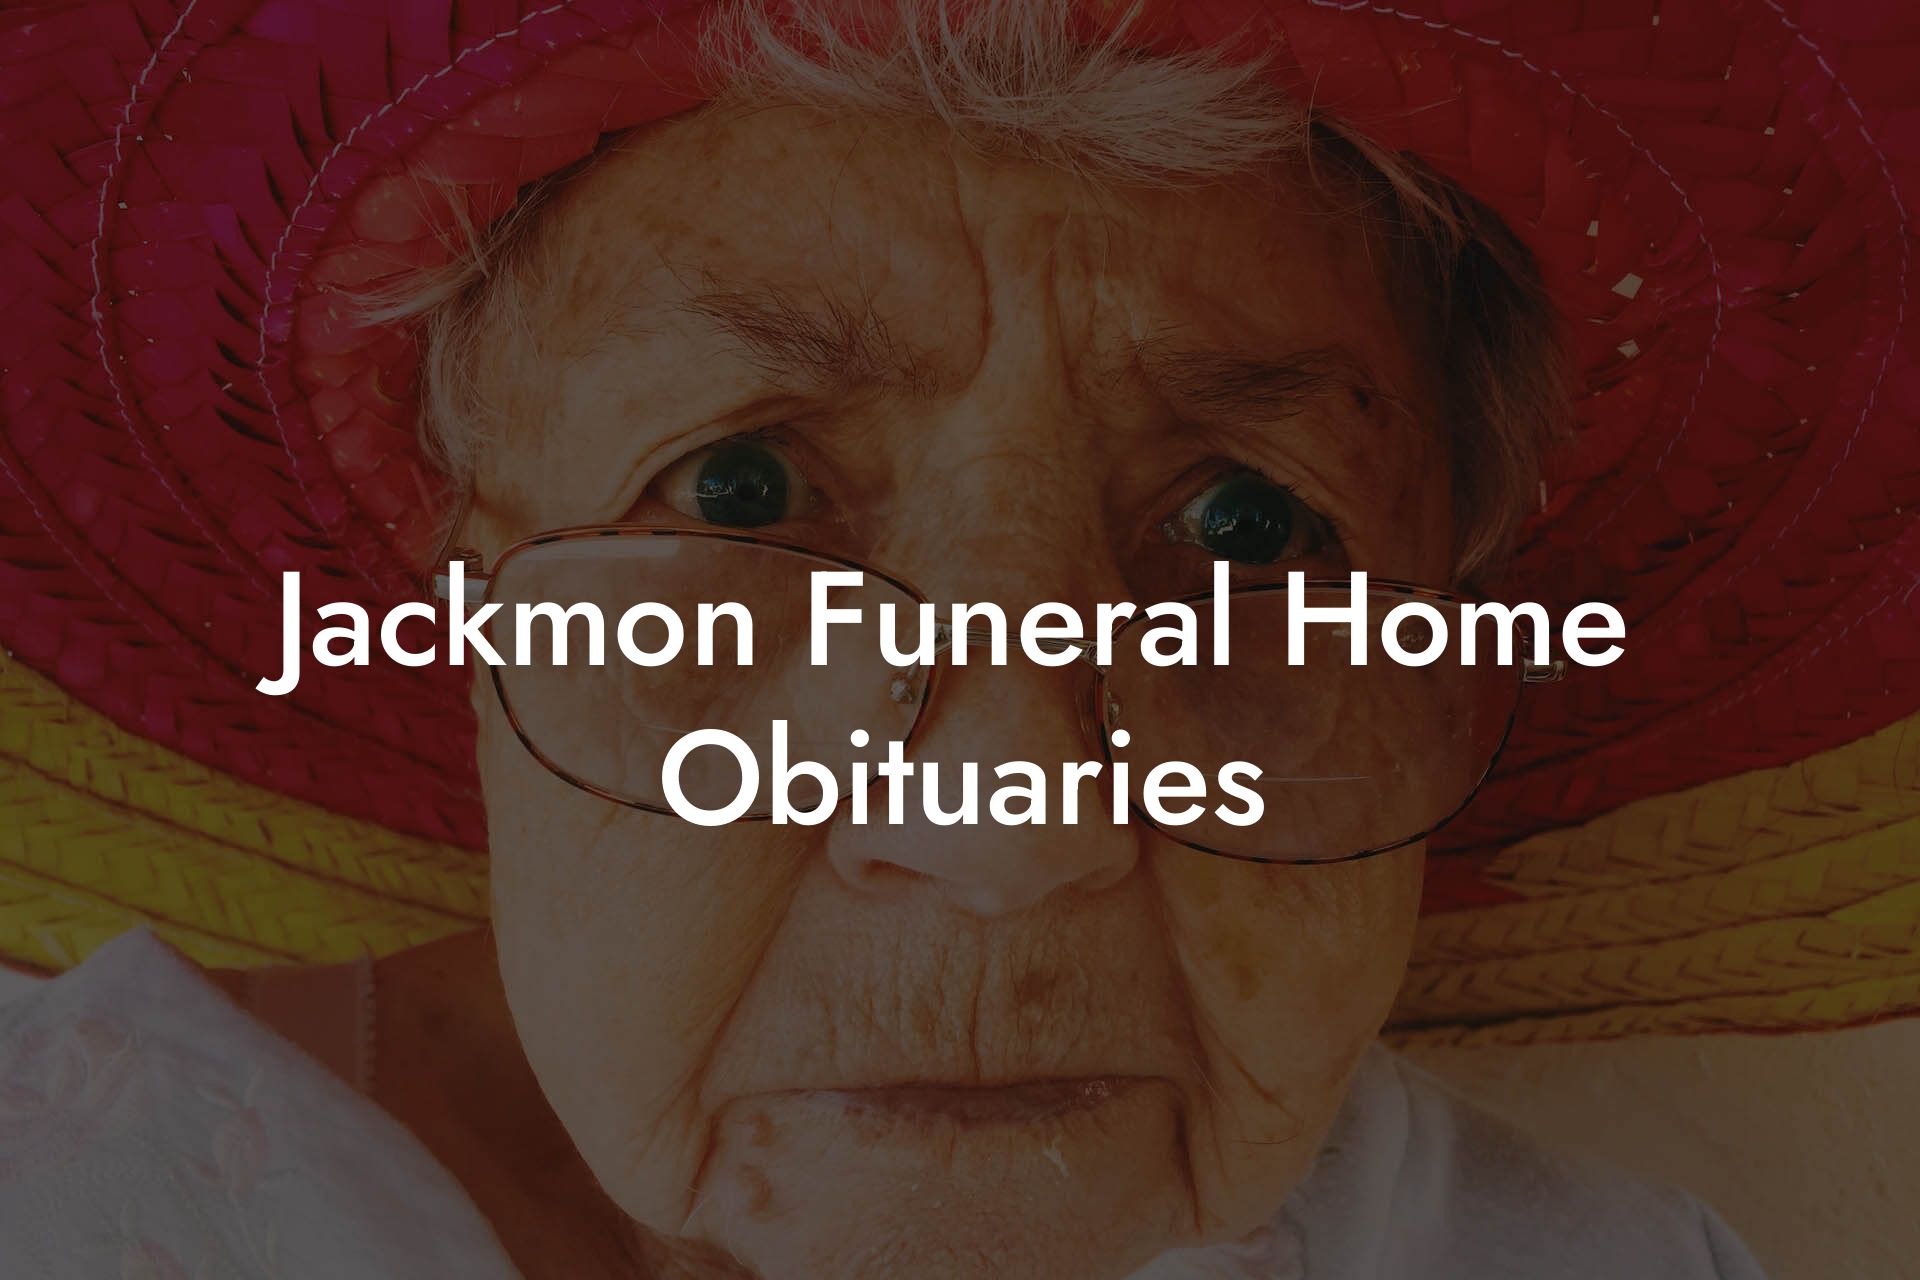 Jackmon Funeral Home Obituaries